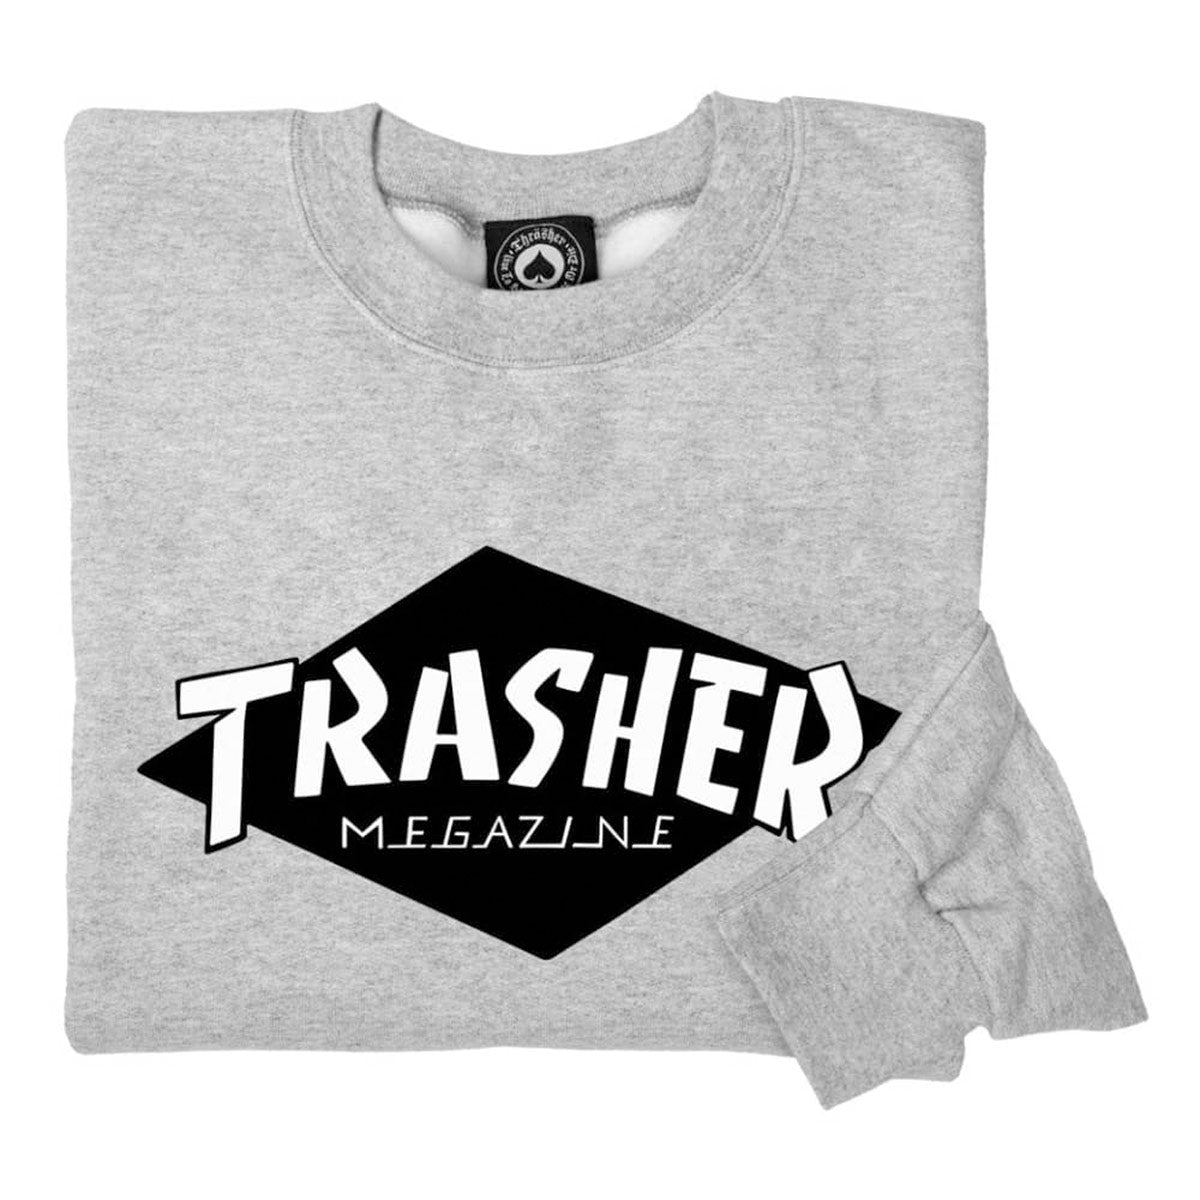 Thrasher Parra Trasher Crewneck Sweatshirt Grey